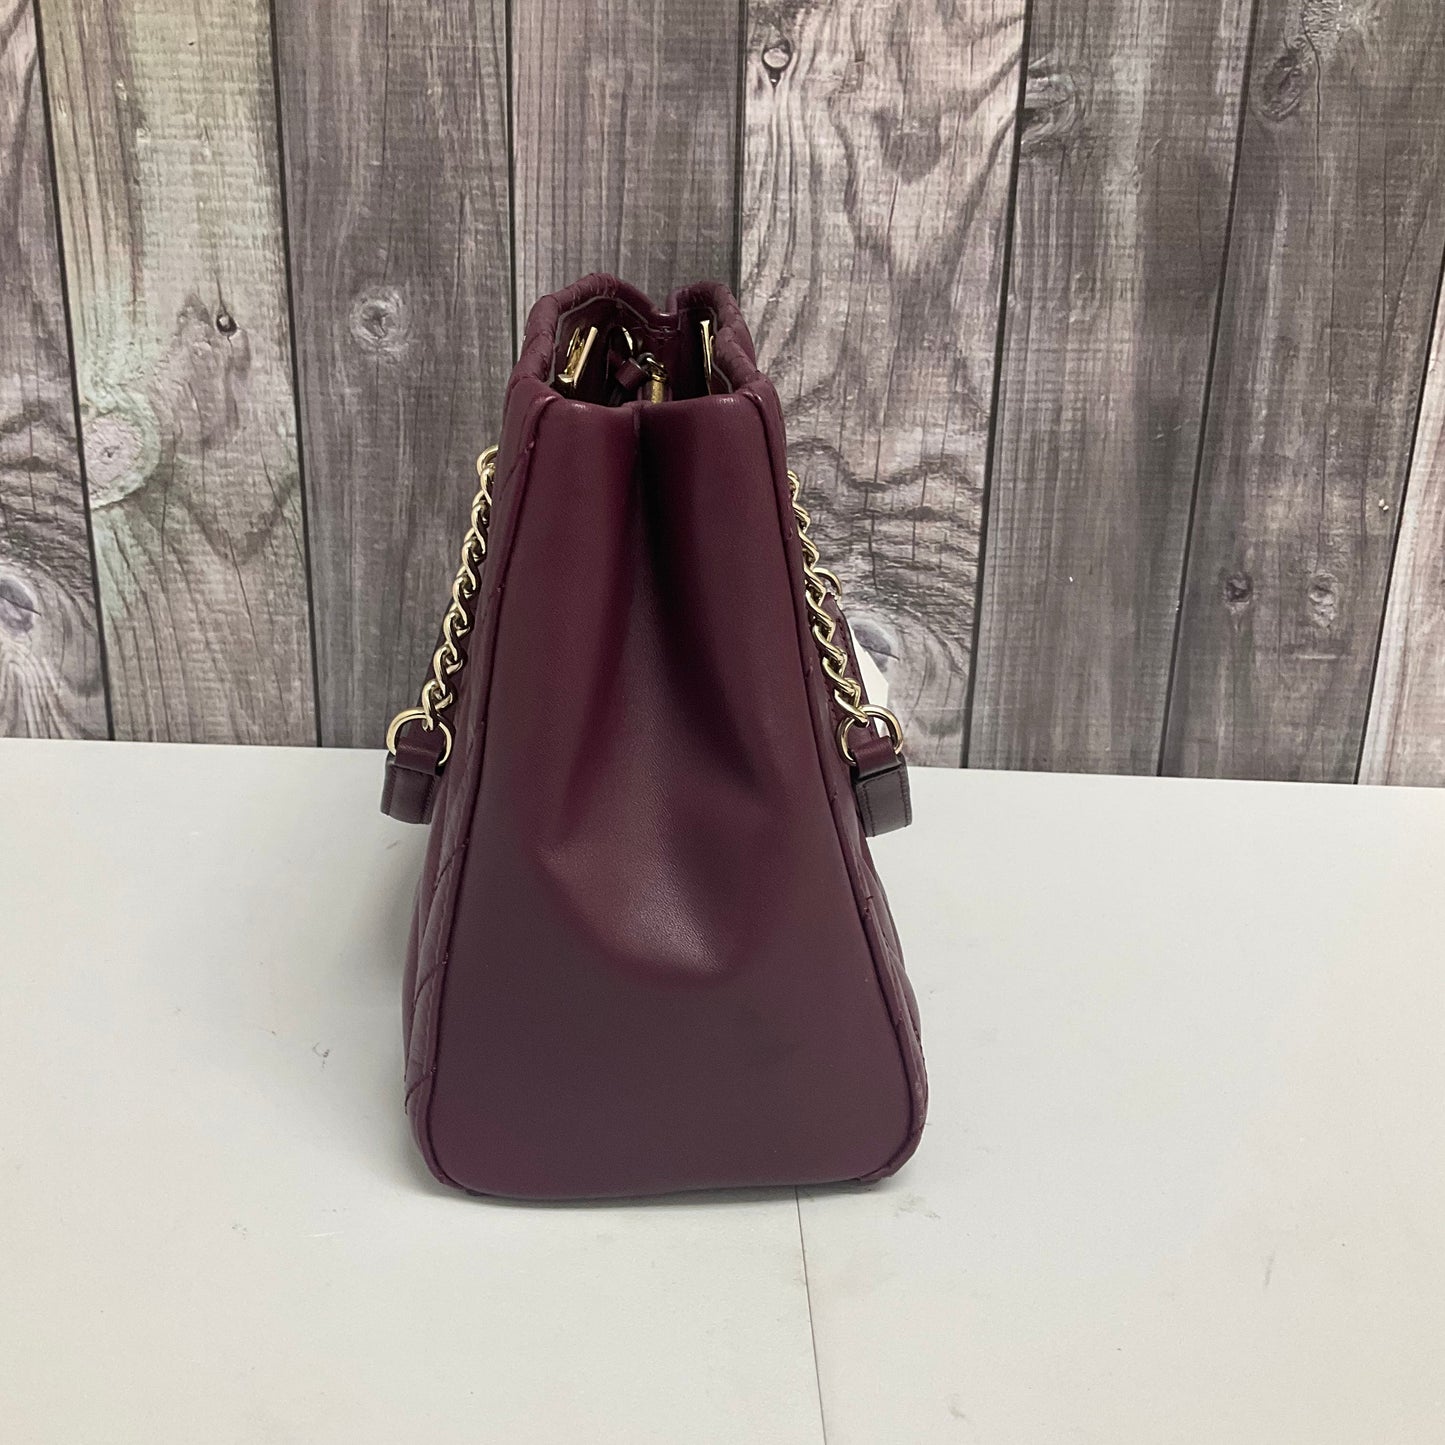 Handbag Leather Kate Spade, Size Medium